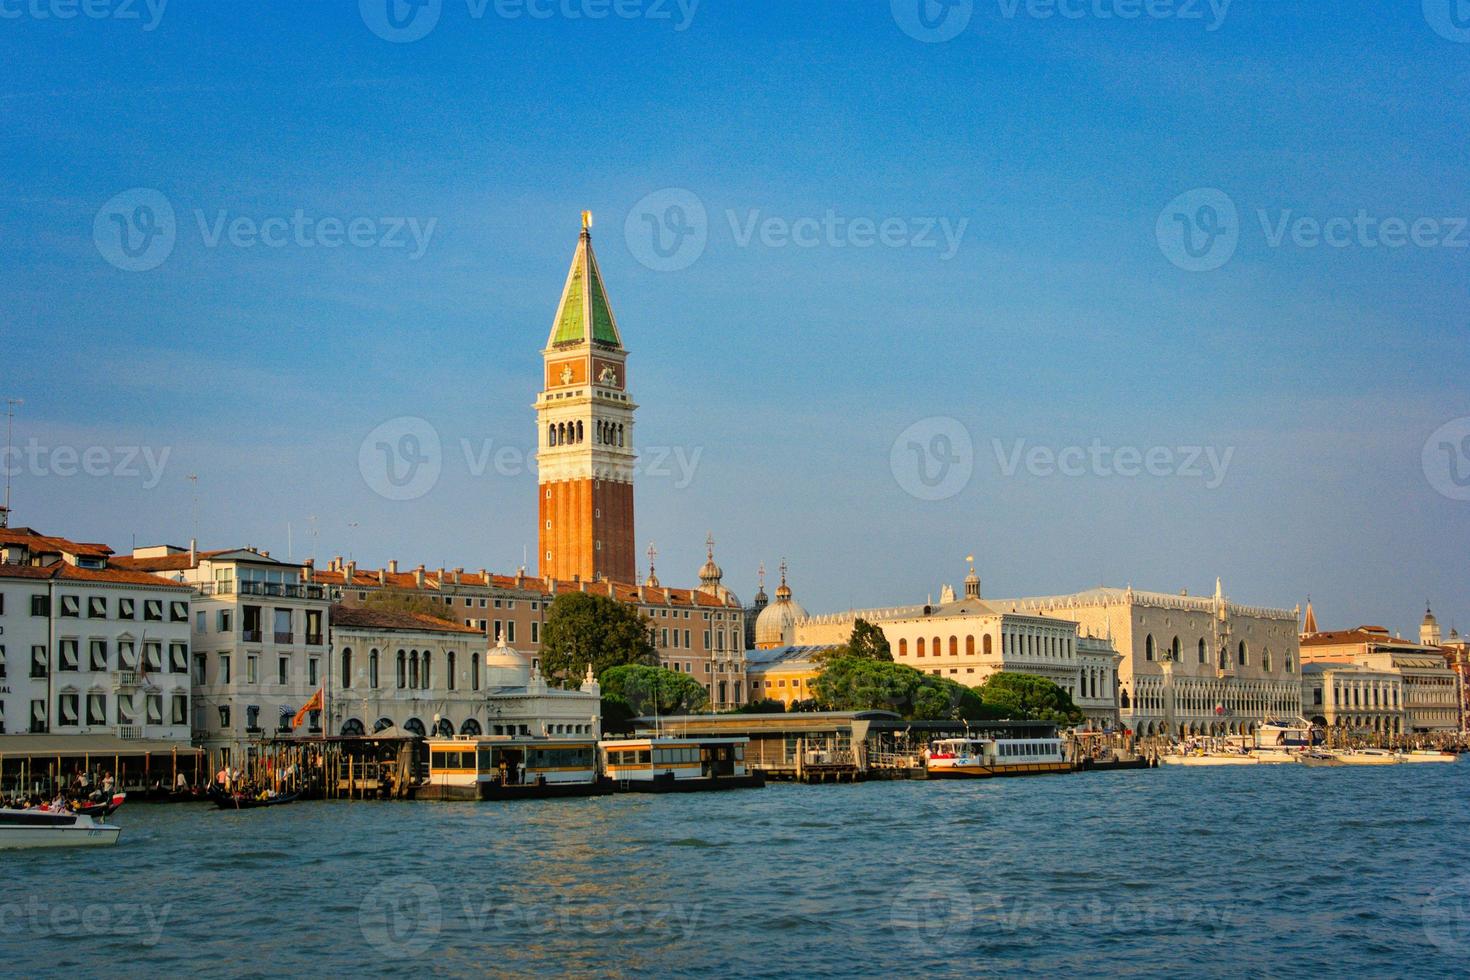 se på de klockstapel di san marco, Venedig, Italien, 2019 foto